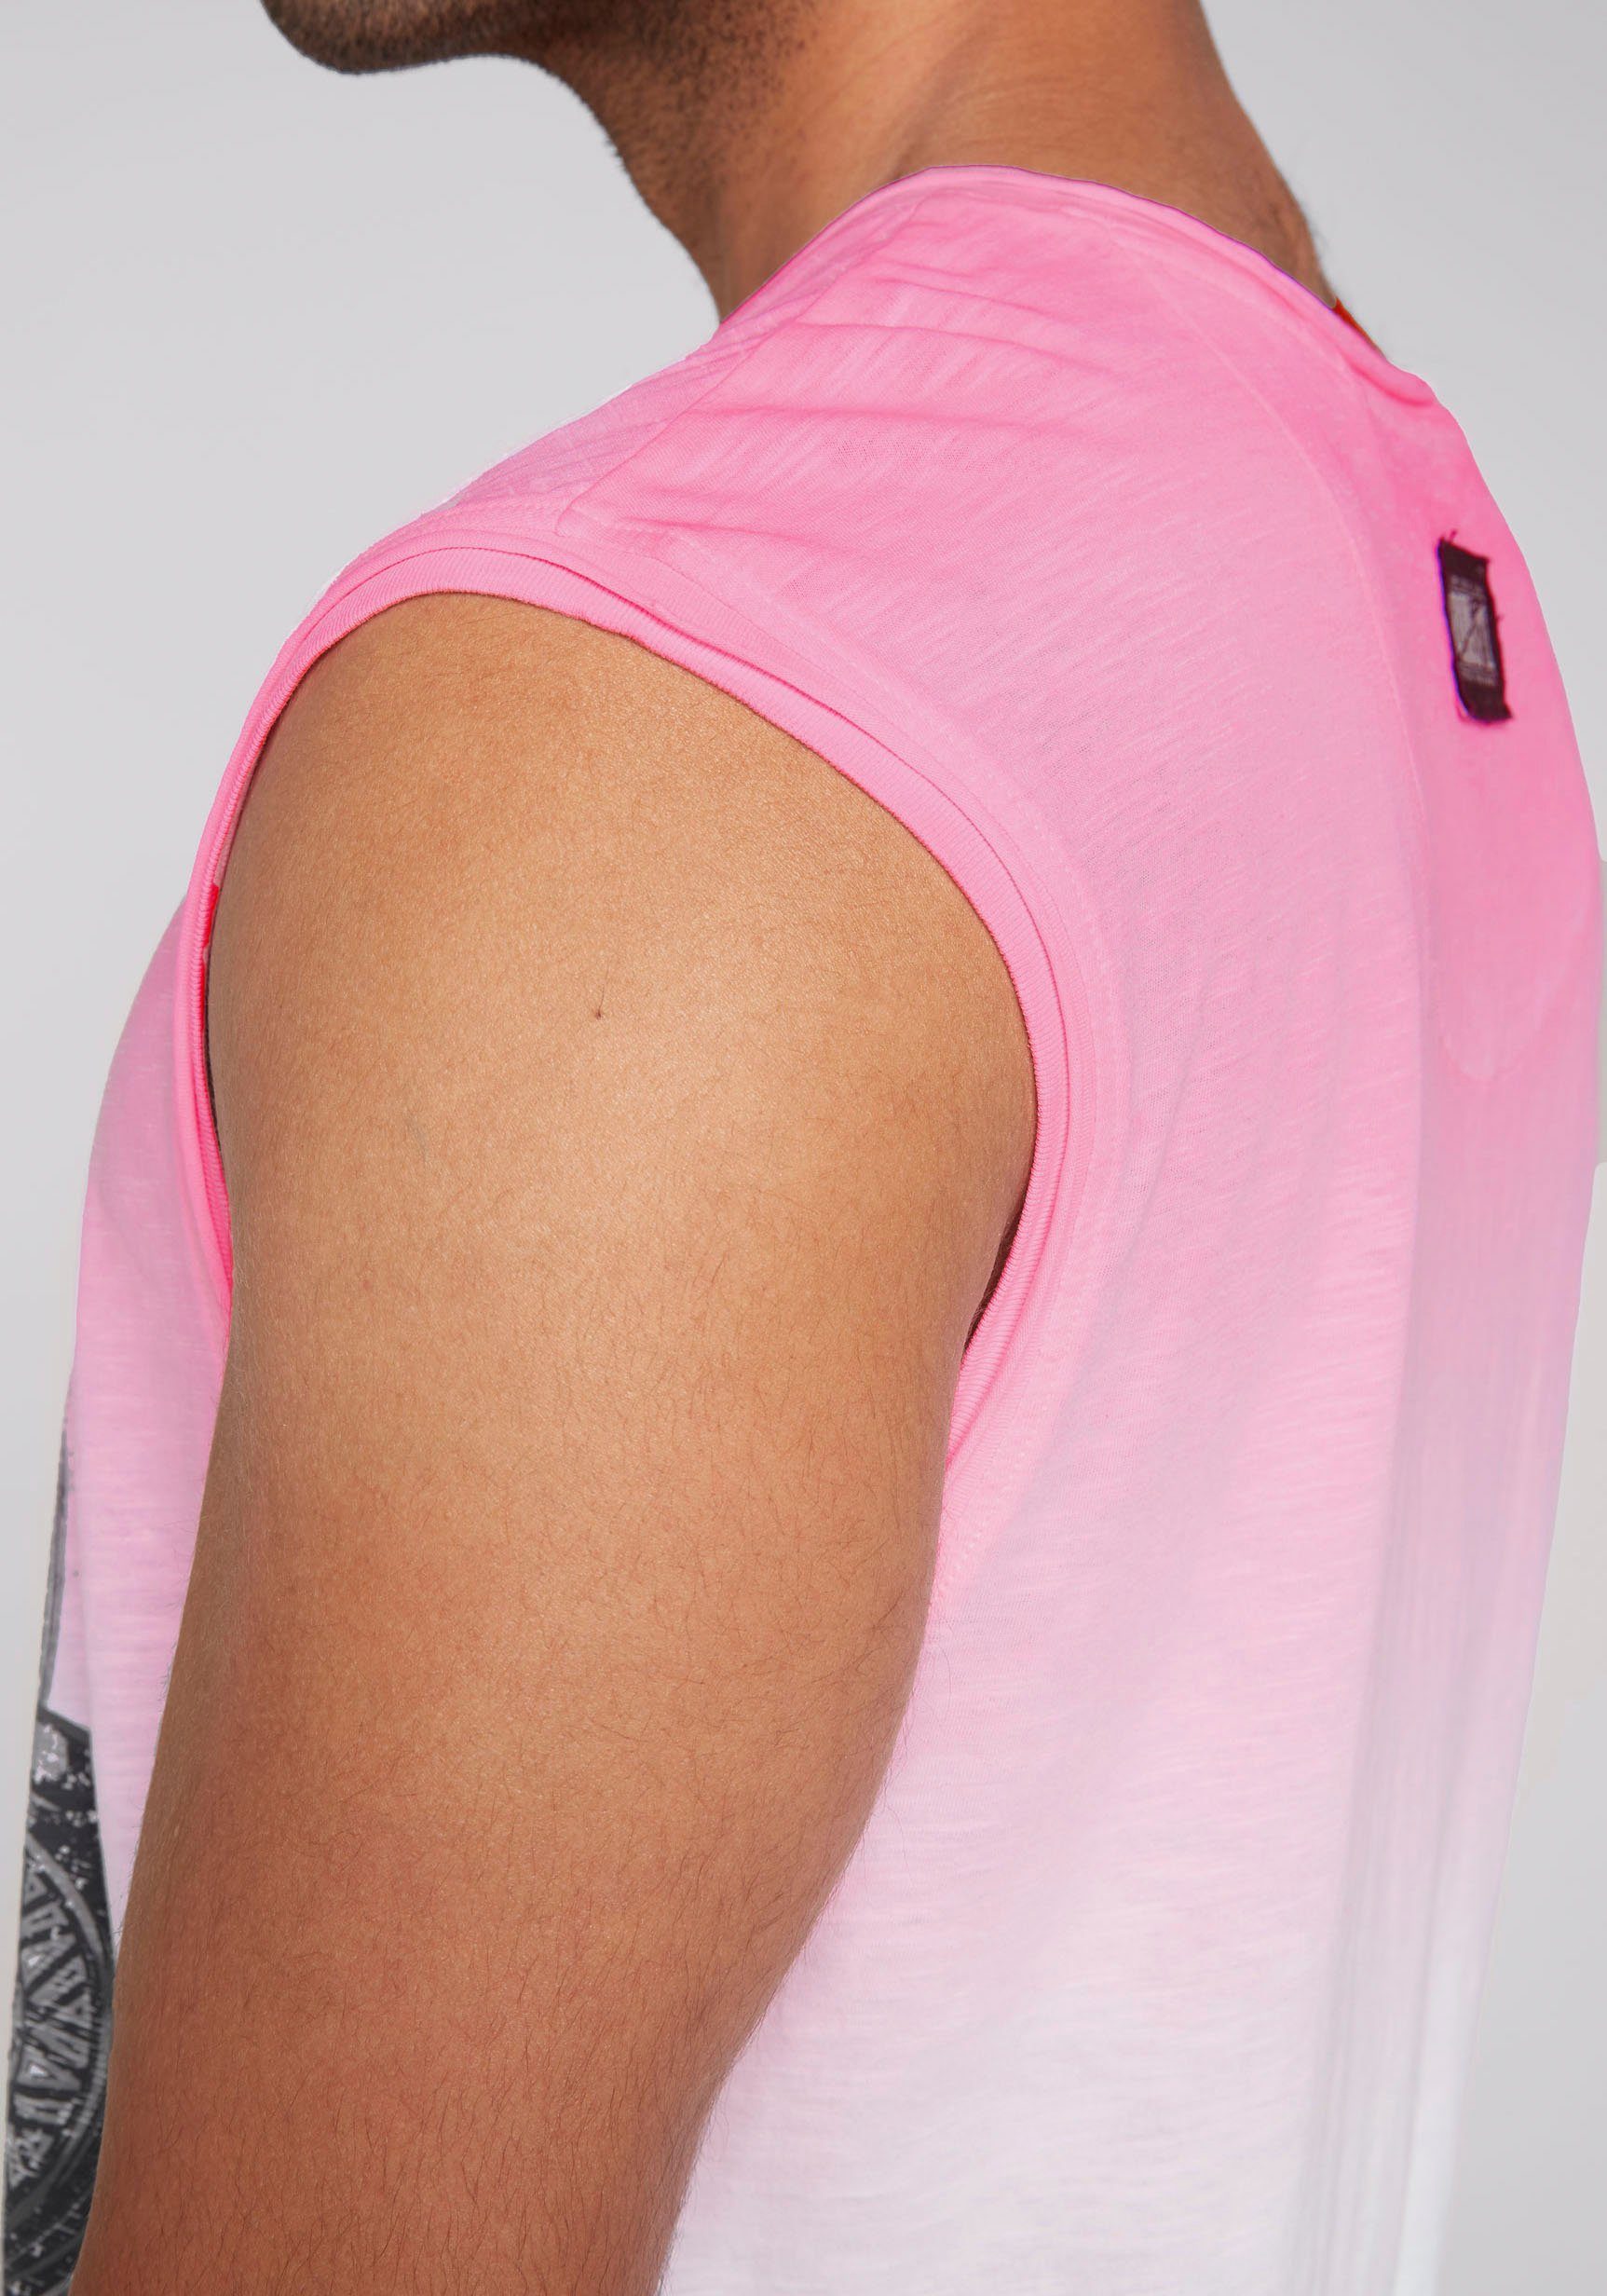 CAMP DAVID / pink V-Shirt neon opticwhite